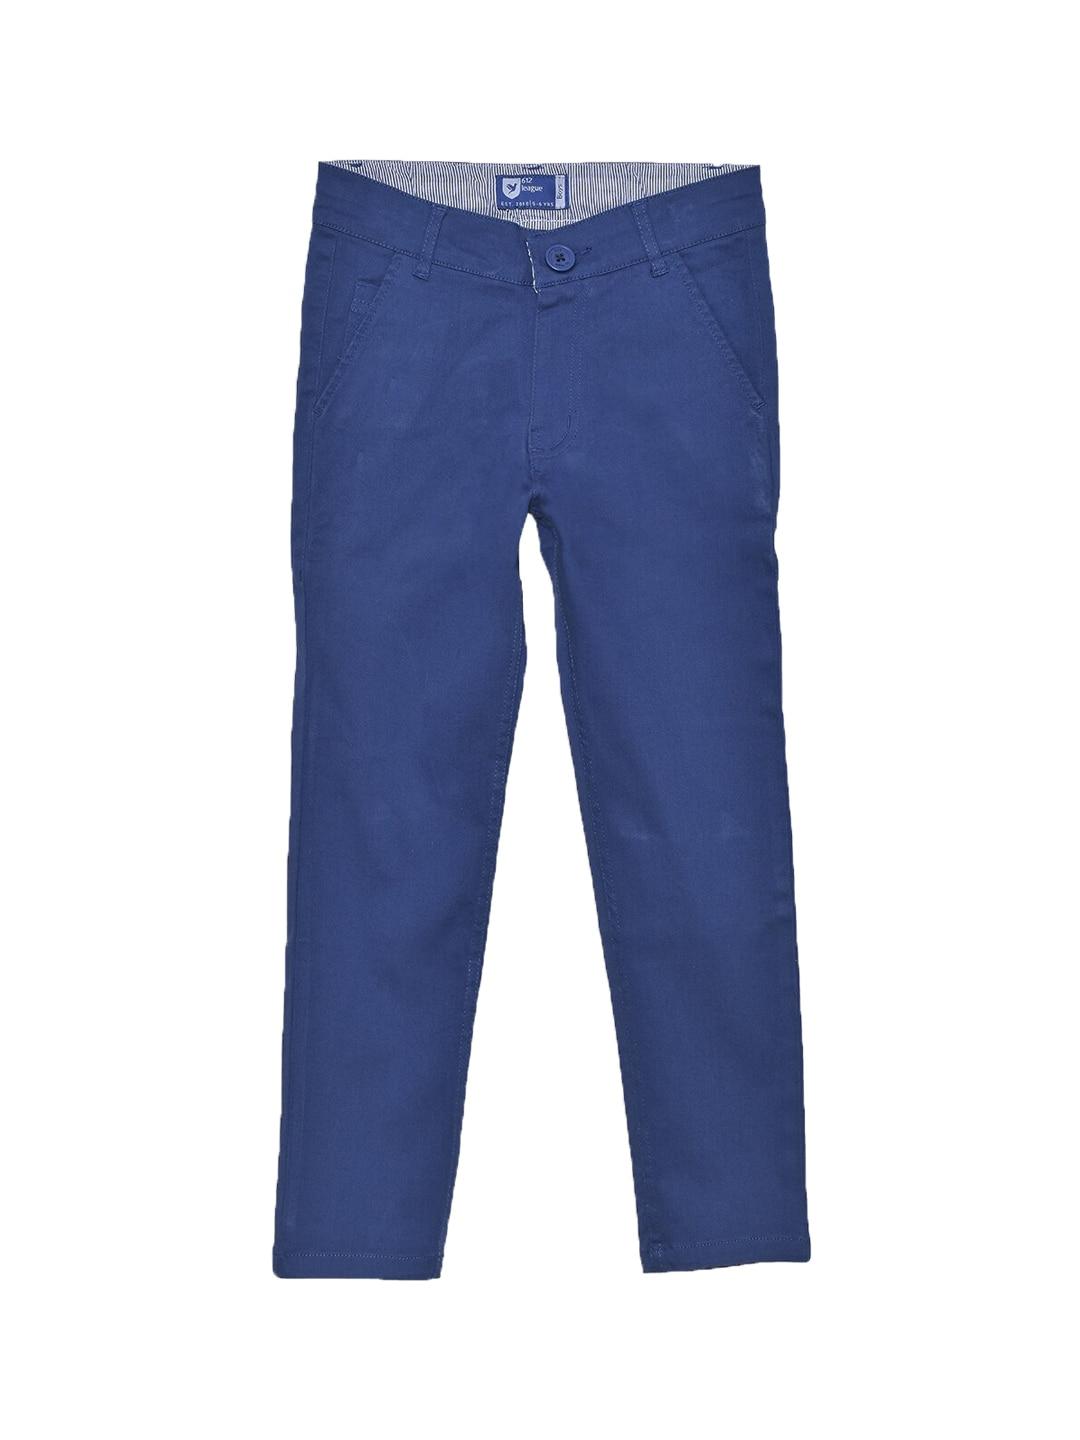 612league-boys-blue-cotton-chinos-trousers